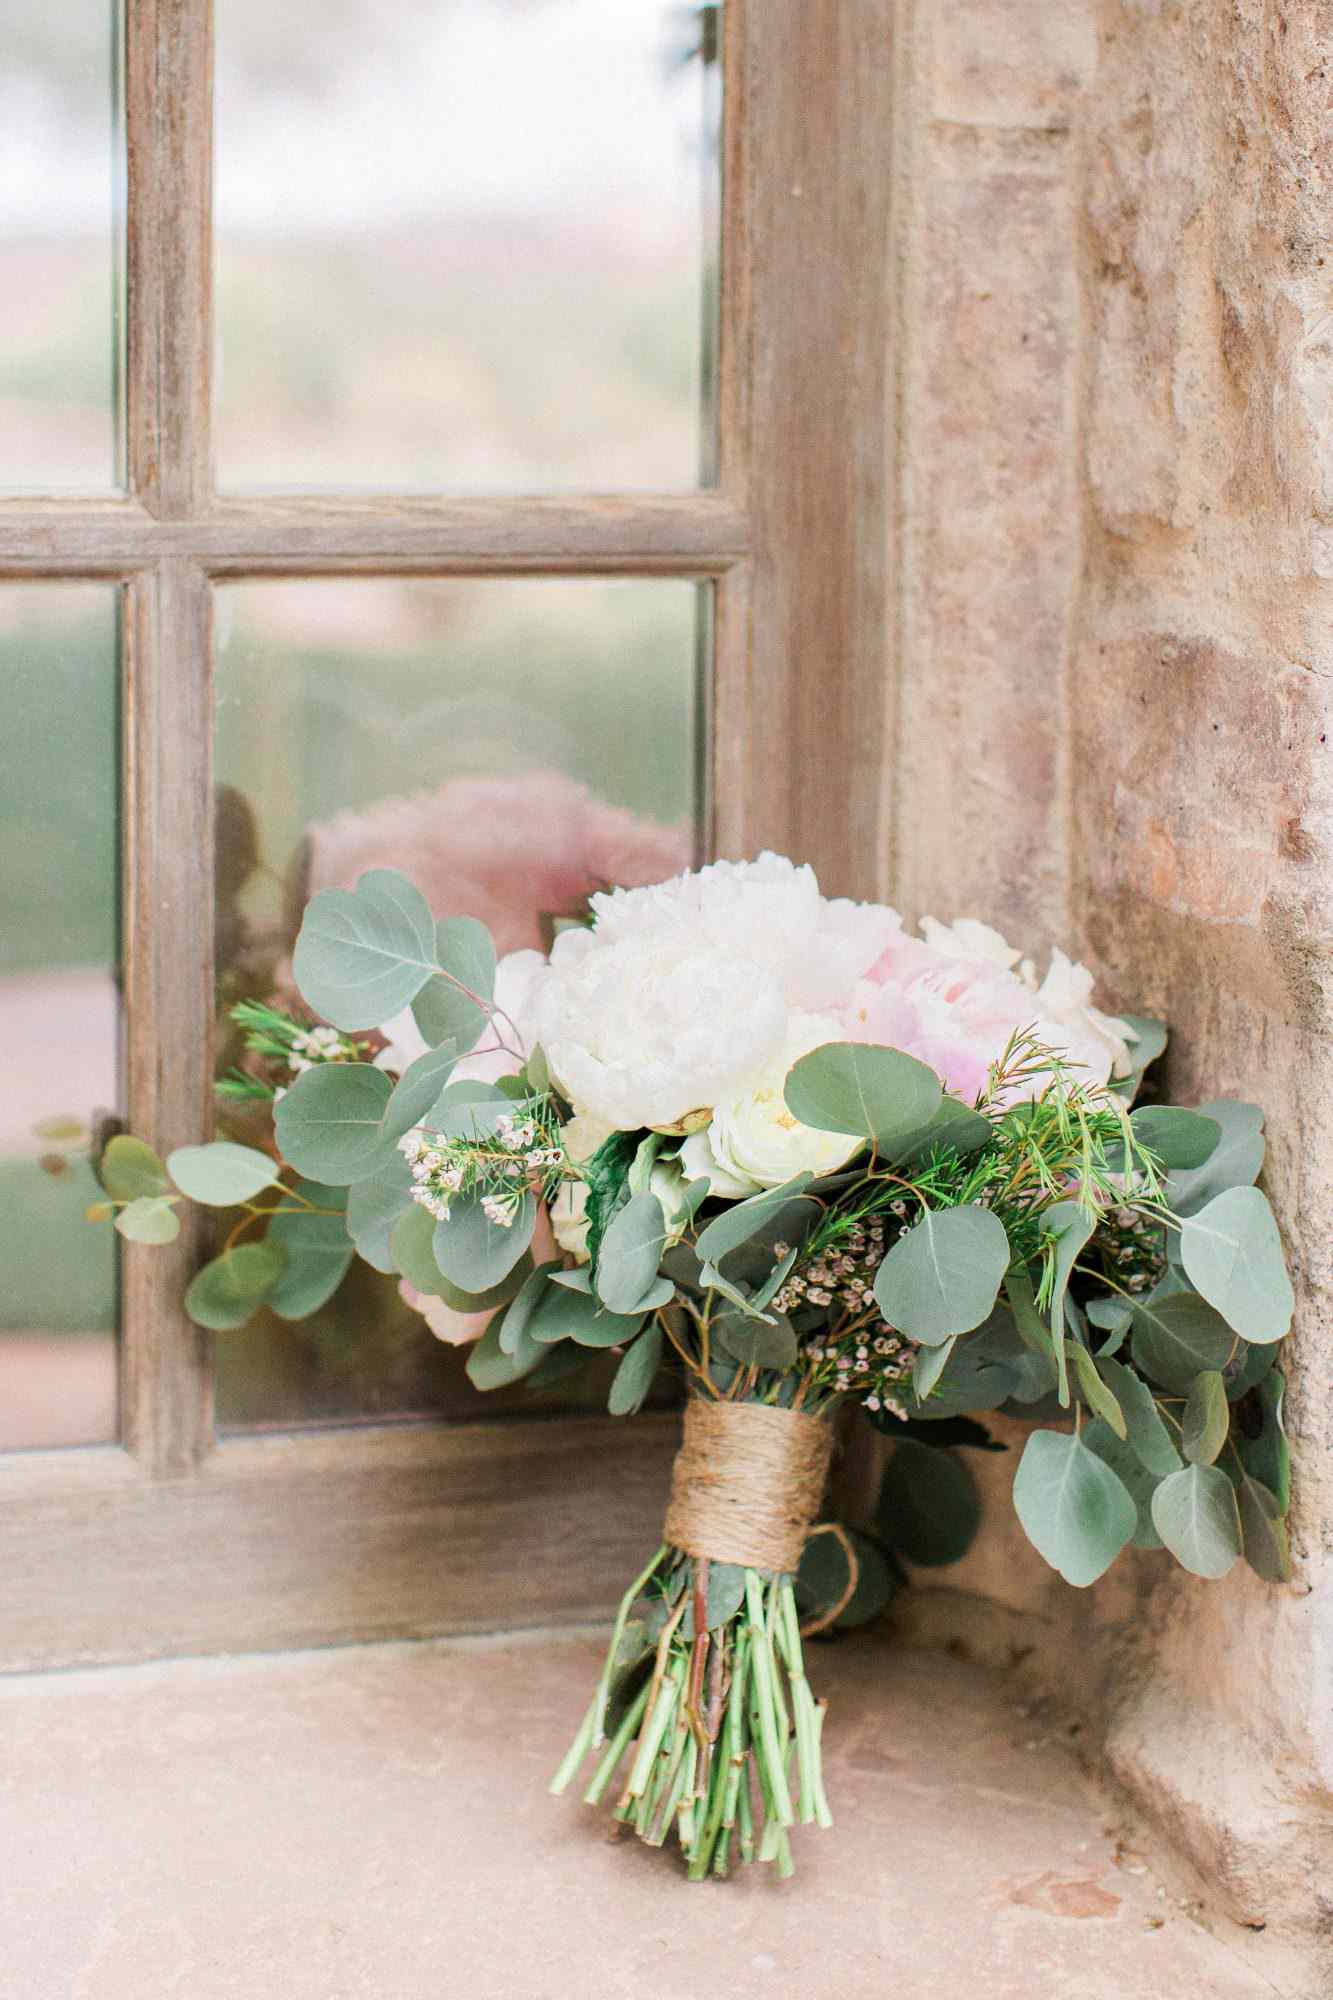 bouquet wraps flowers twine resting against window